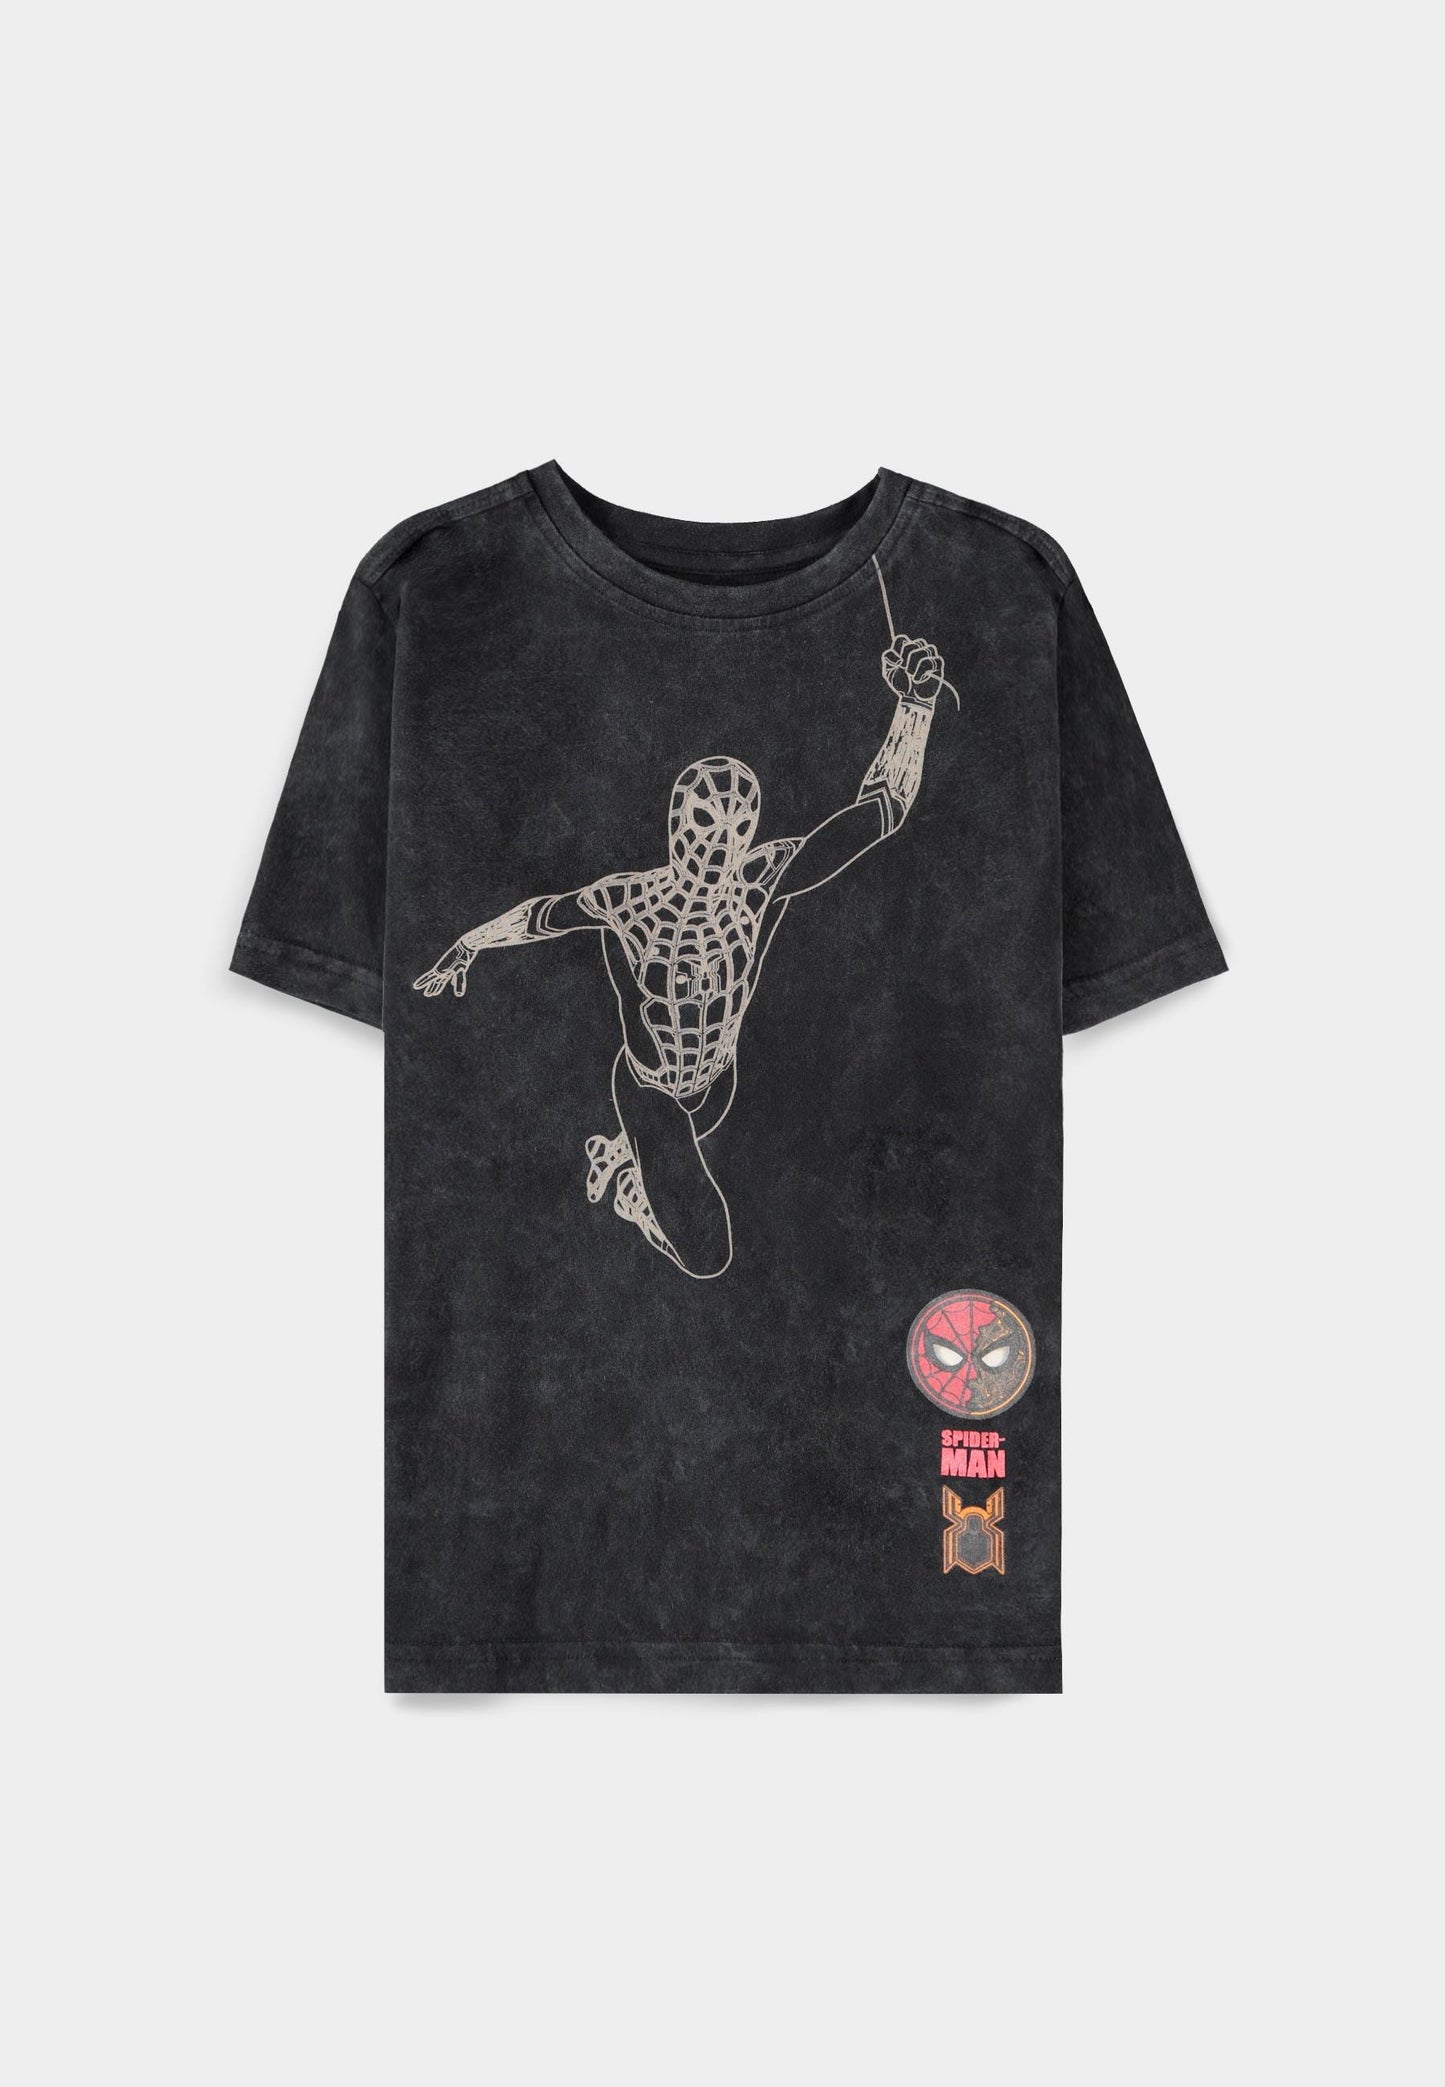 Marvel - Spider-Man - Boys Tie Dye Short Sleeved T-shirt